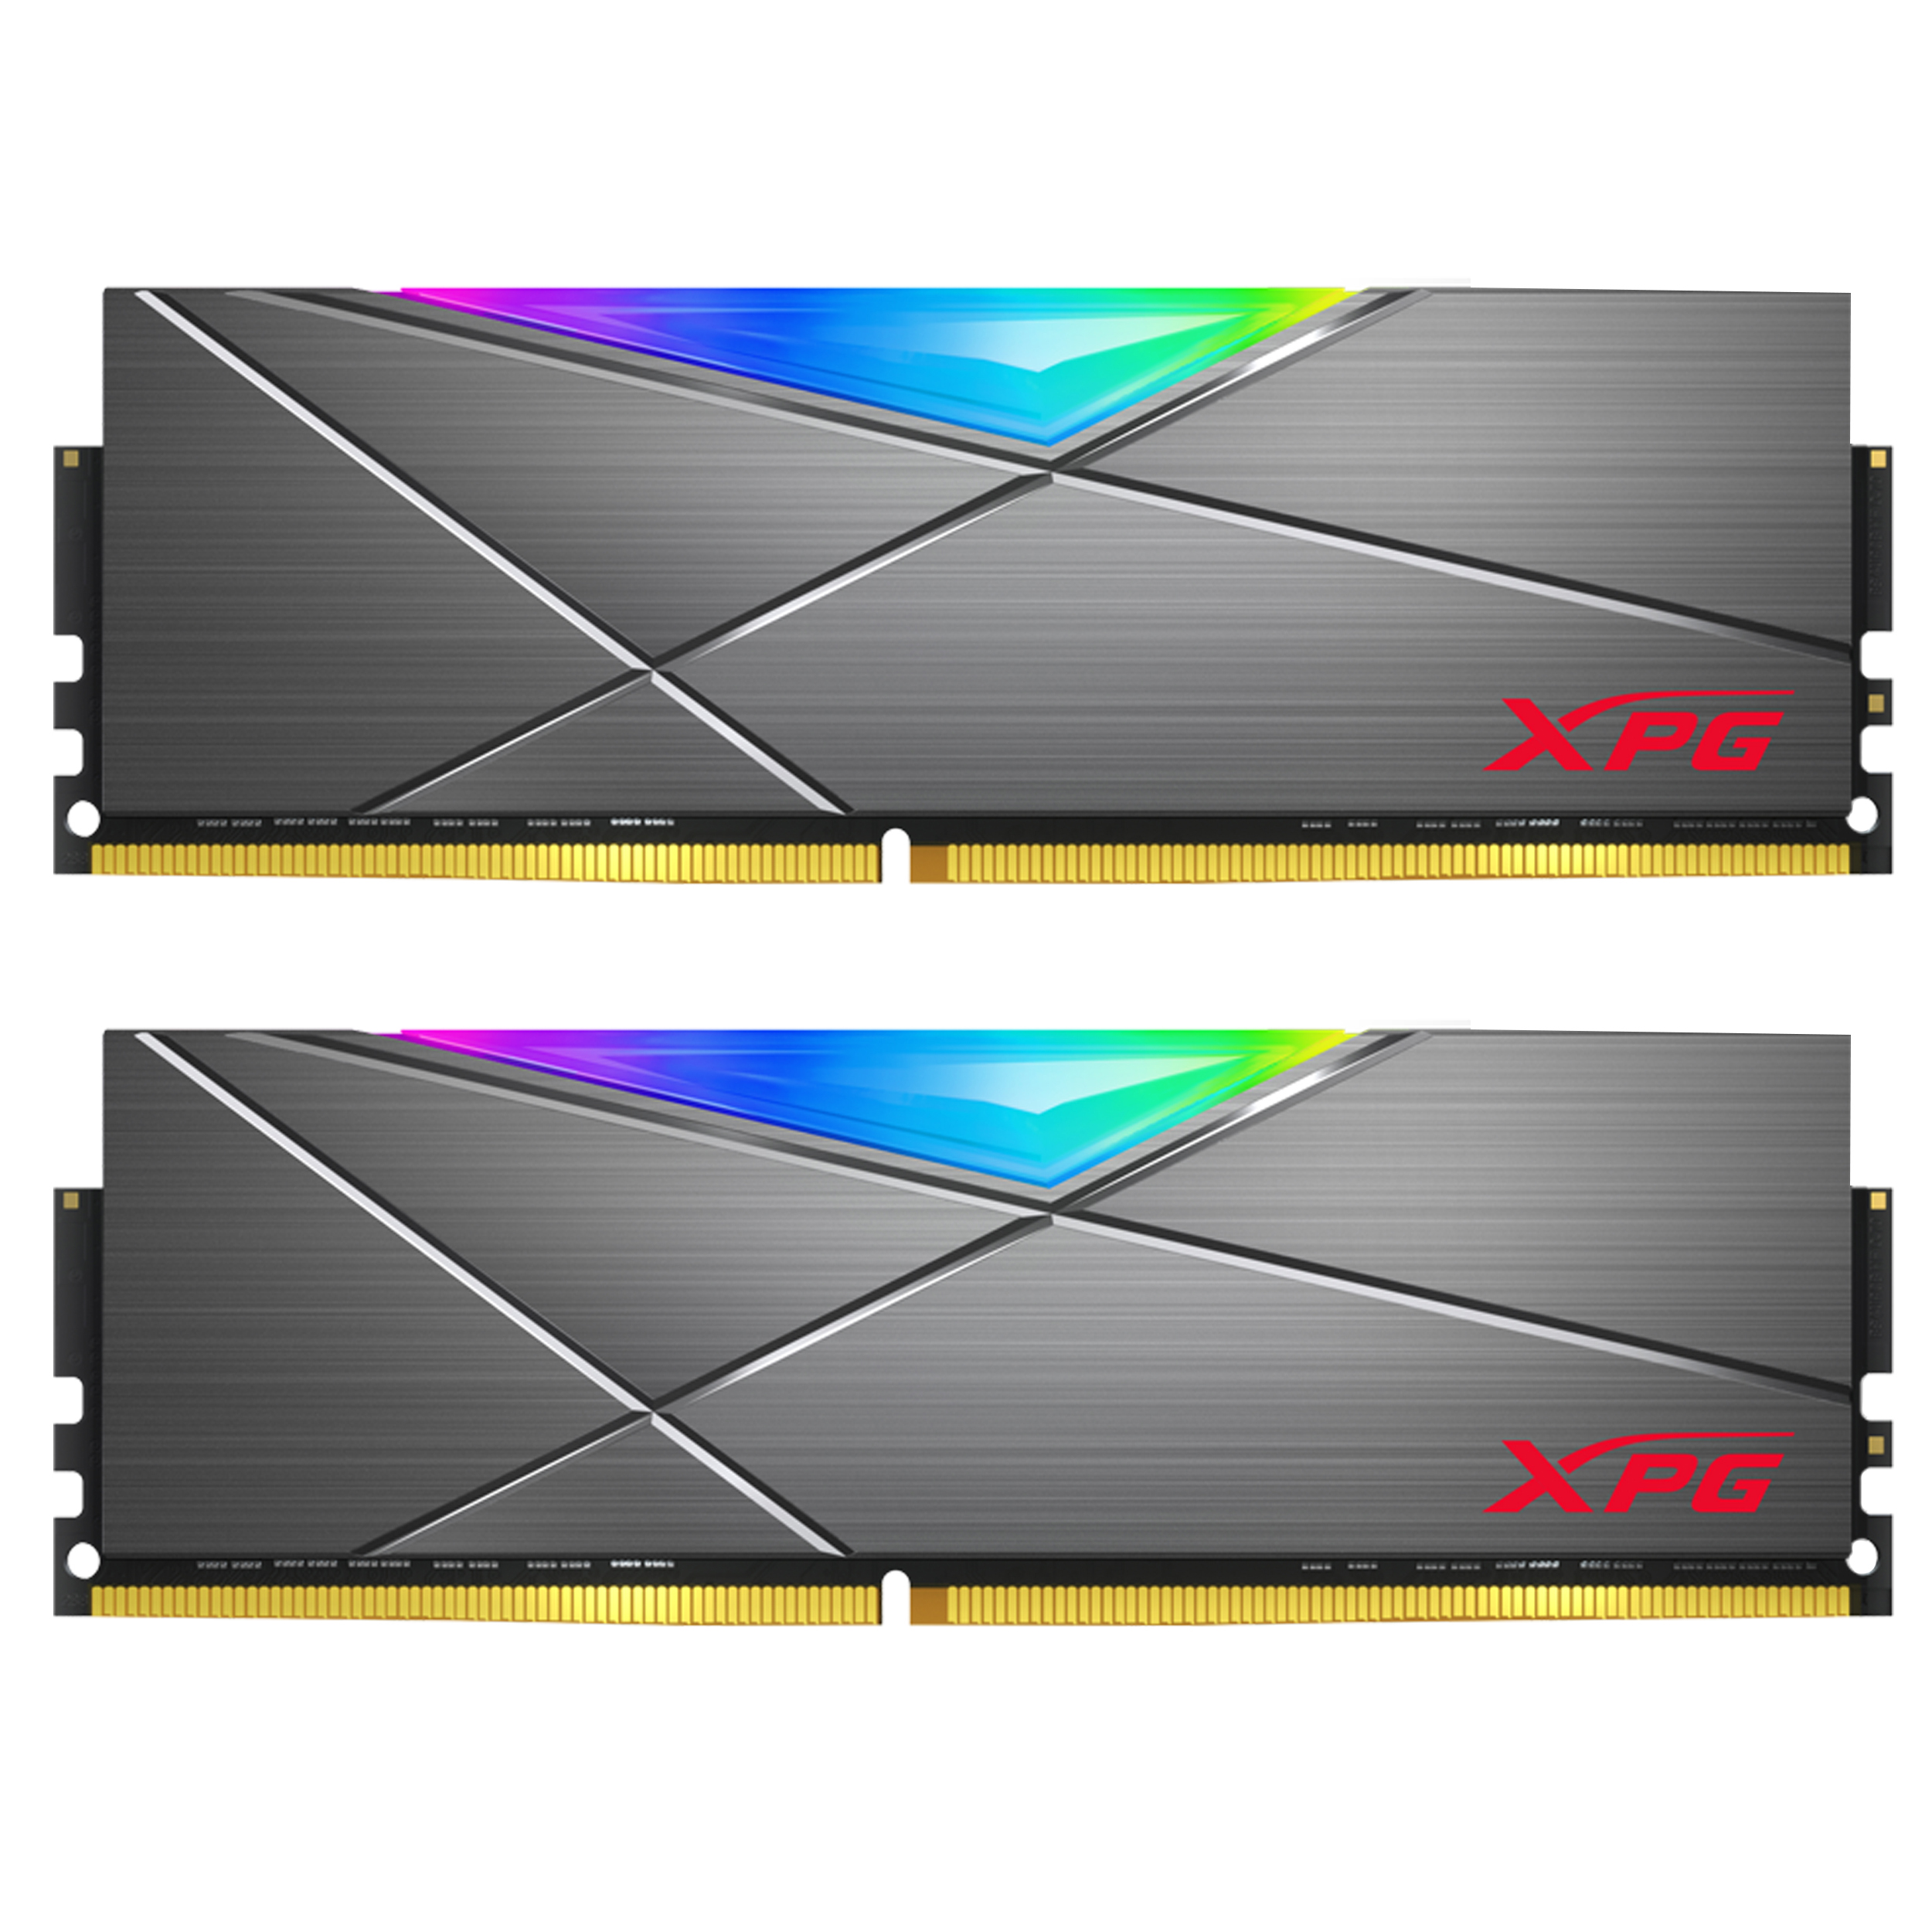 رم دسکتاپ DDR4 دو کاناله 4133 مگاهرتز CL19 ای دیتا ایکس پی جی مدل SPECTRIX D50 ظرفیت 16 گیگابایت